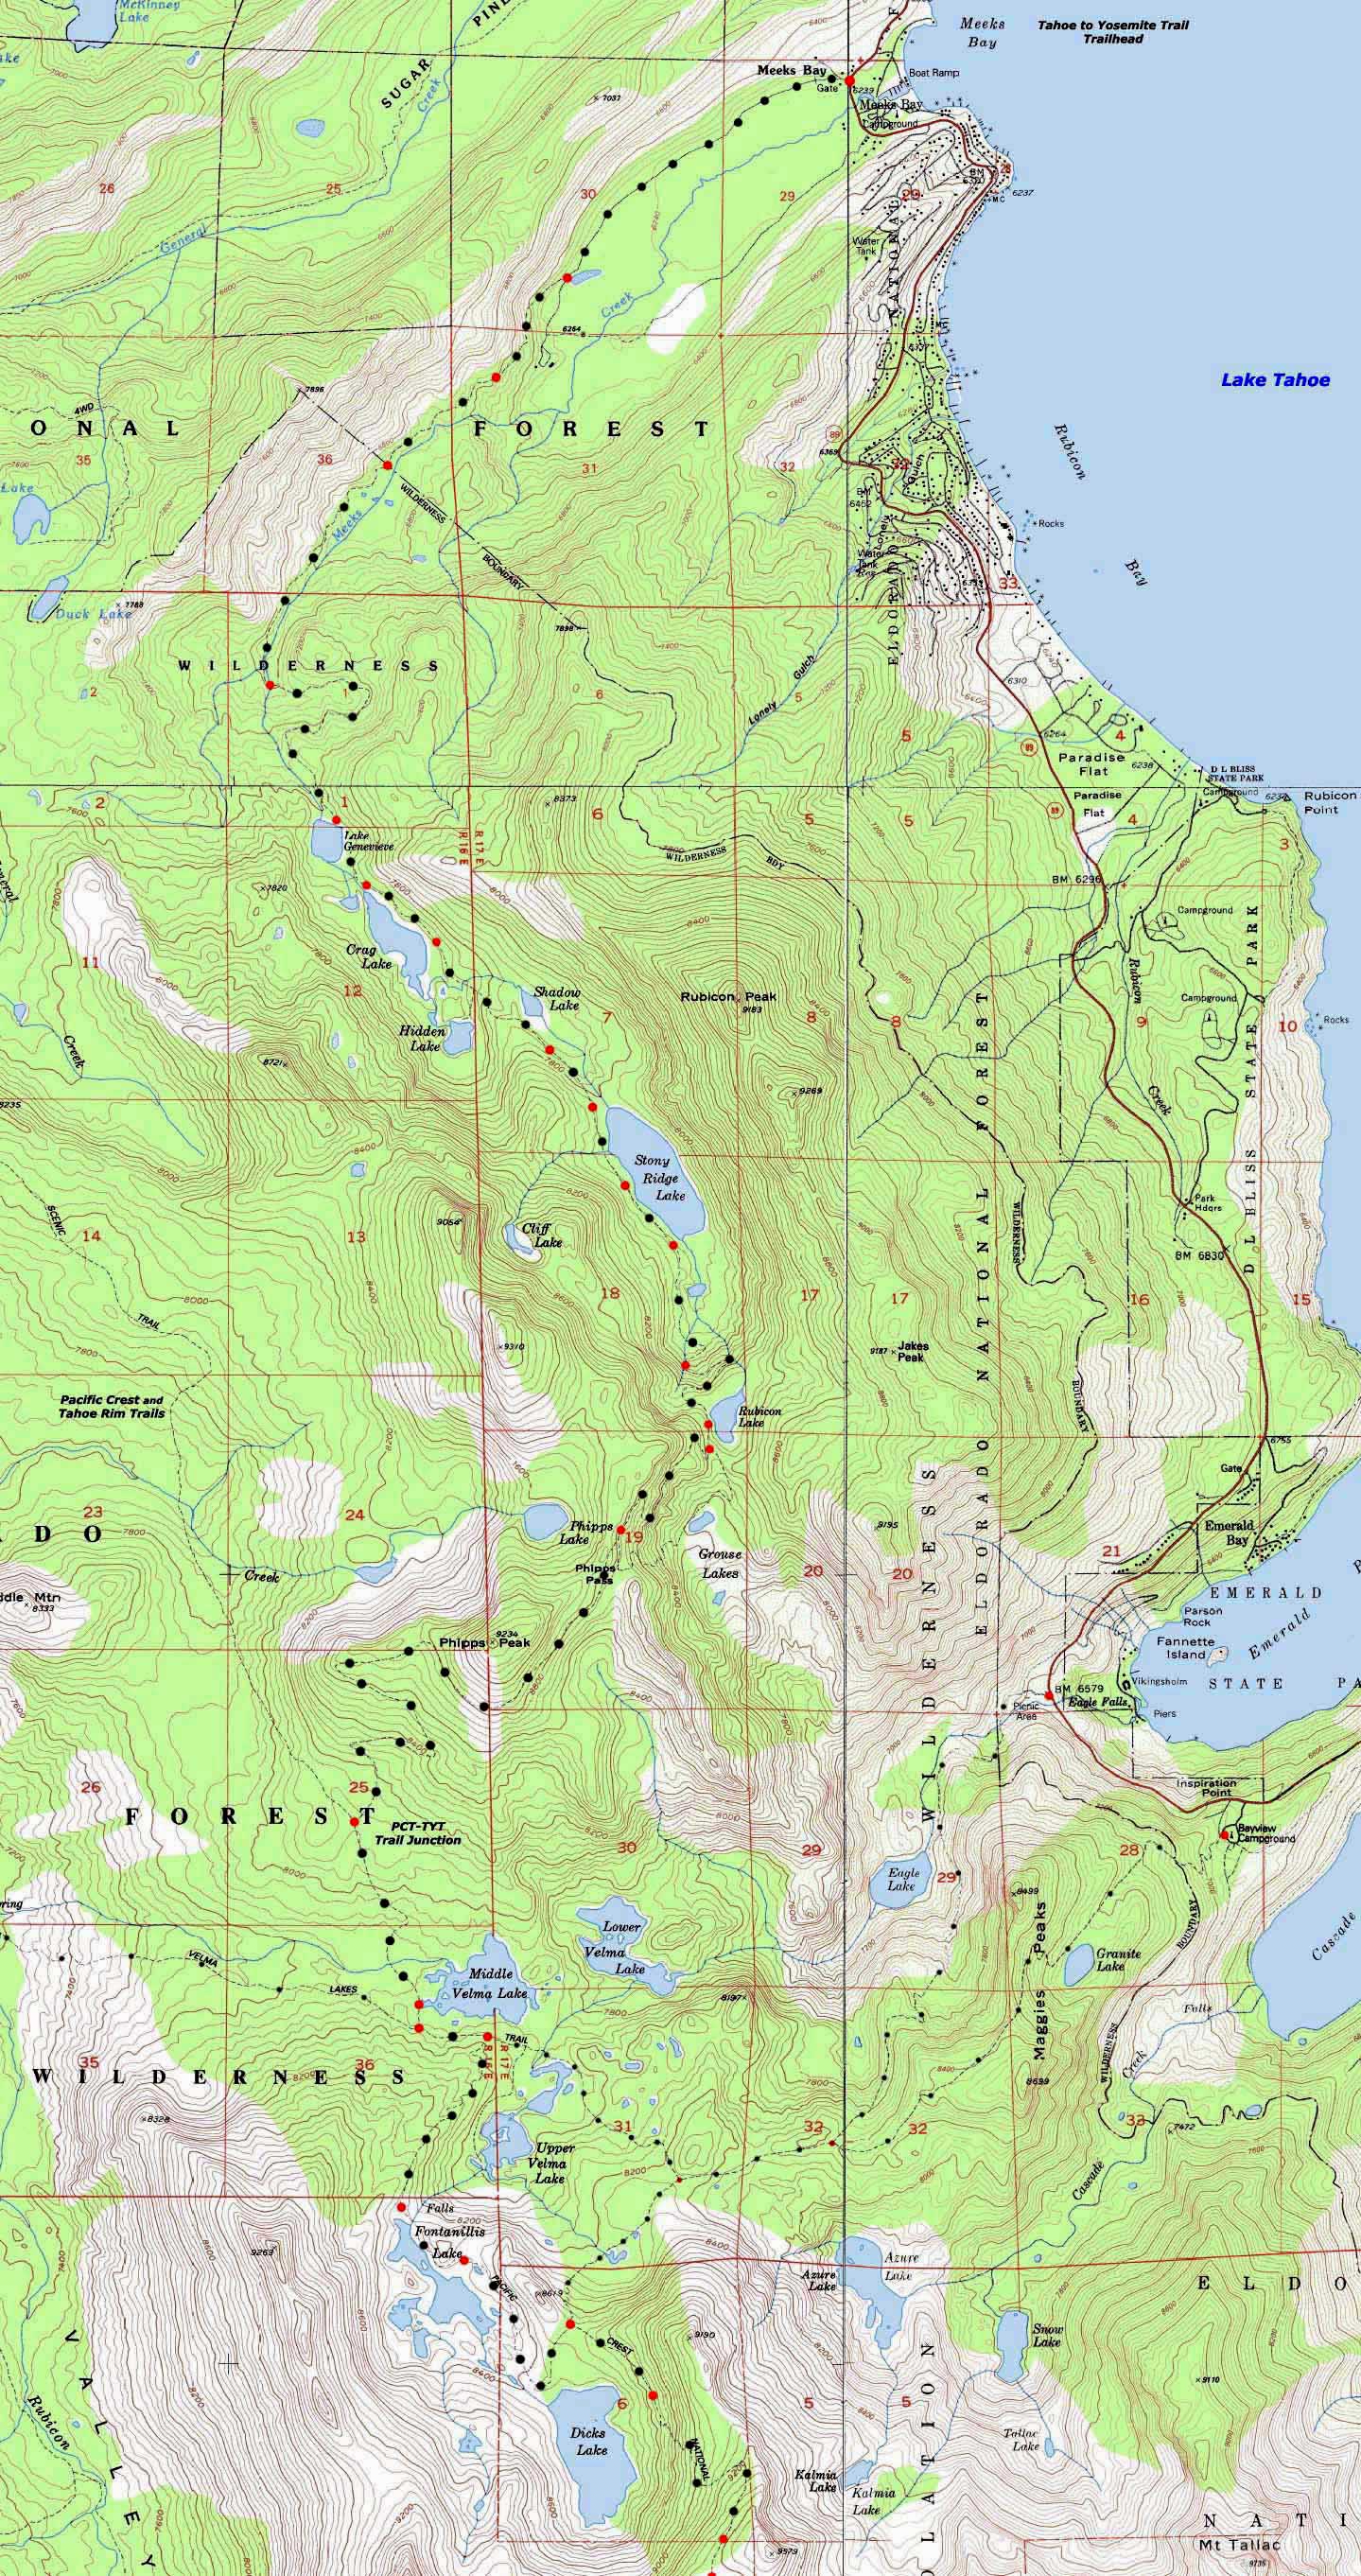 Meeks Bay Trailhead region topo hiking map.